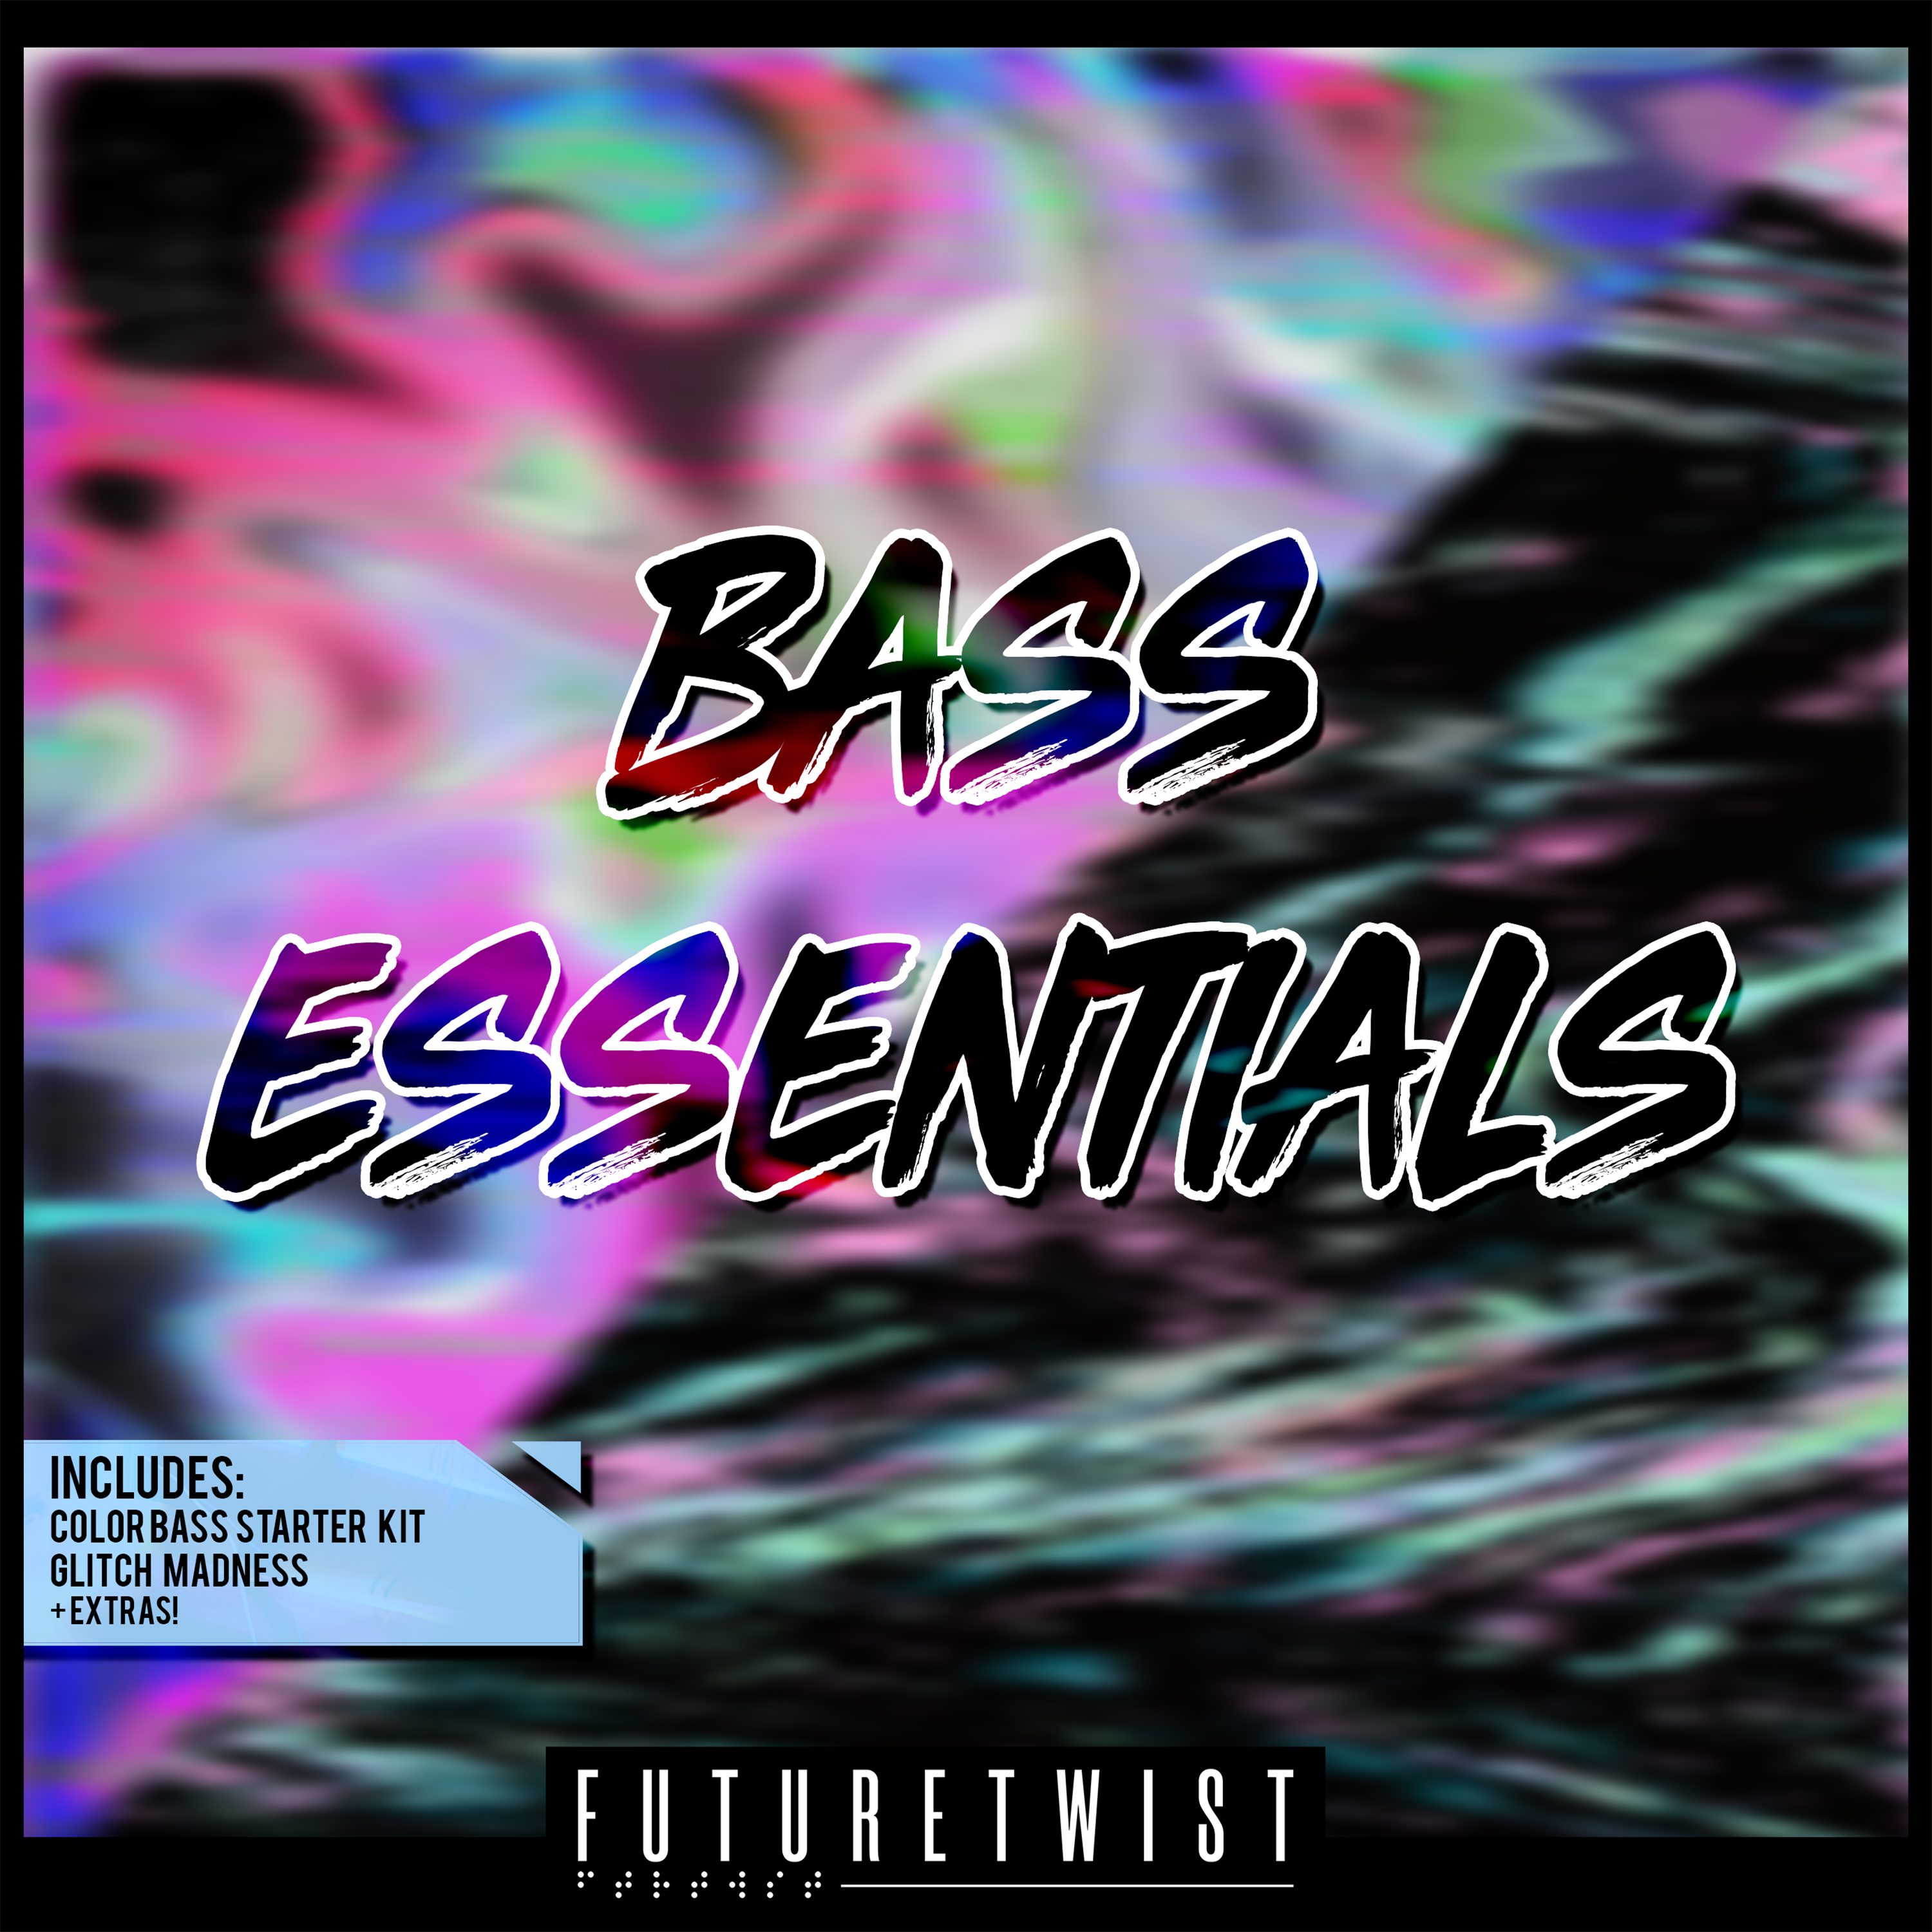 Bass Essentials Bundle